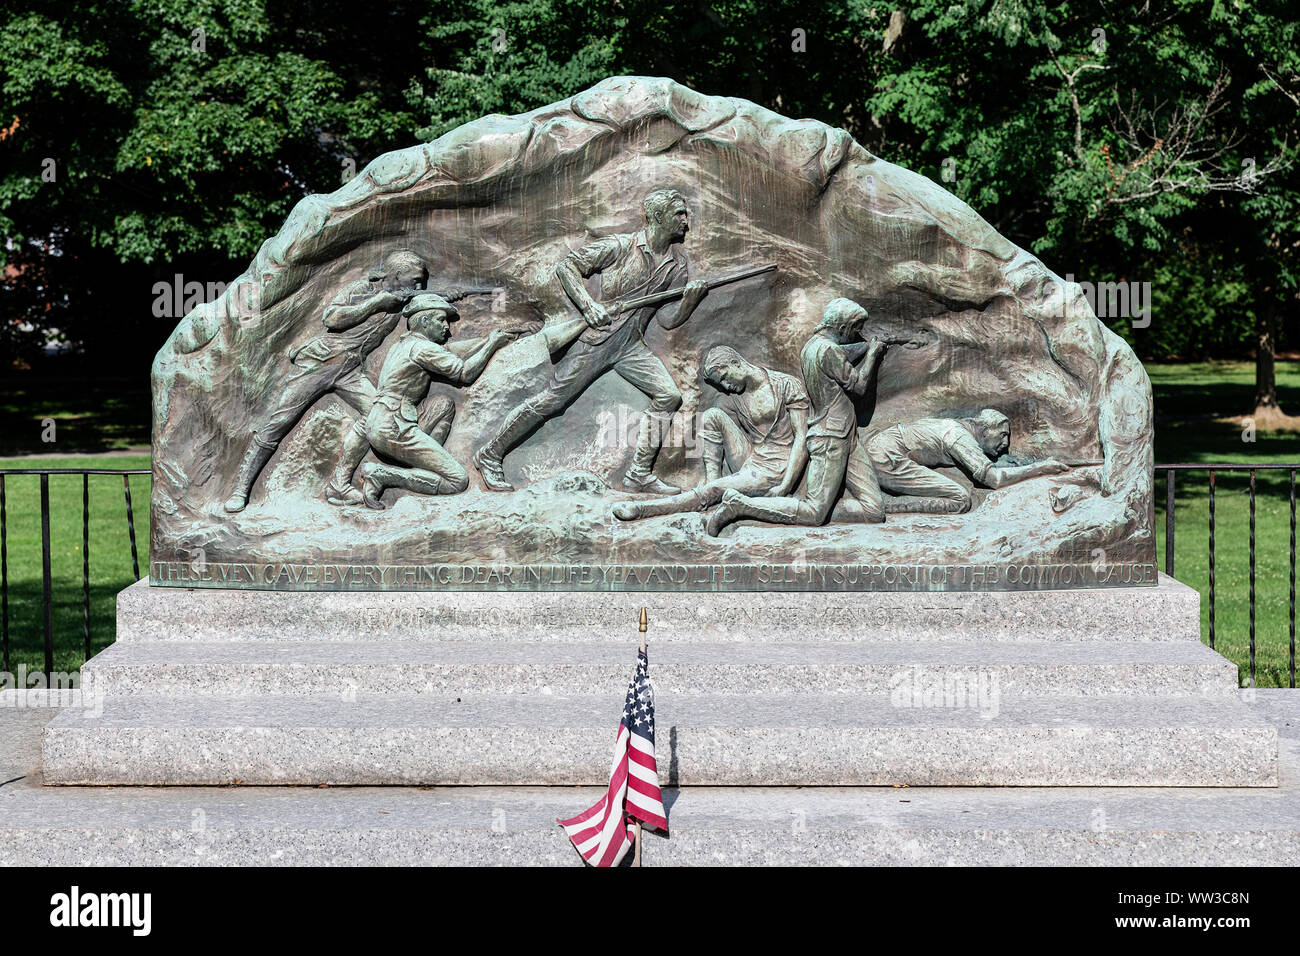 Minute Men memorial, Lexington, Massachusetts, USA Stock Photo